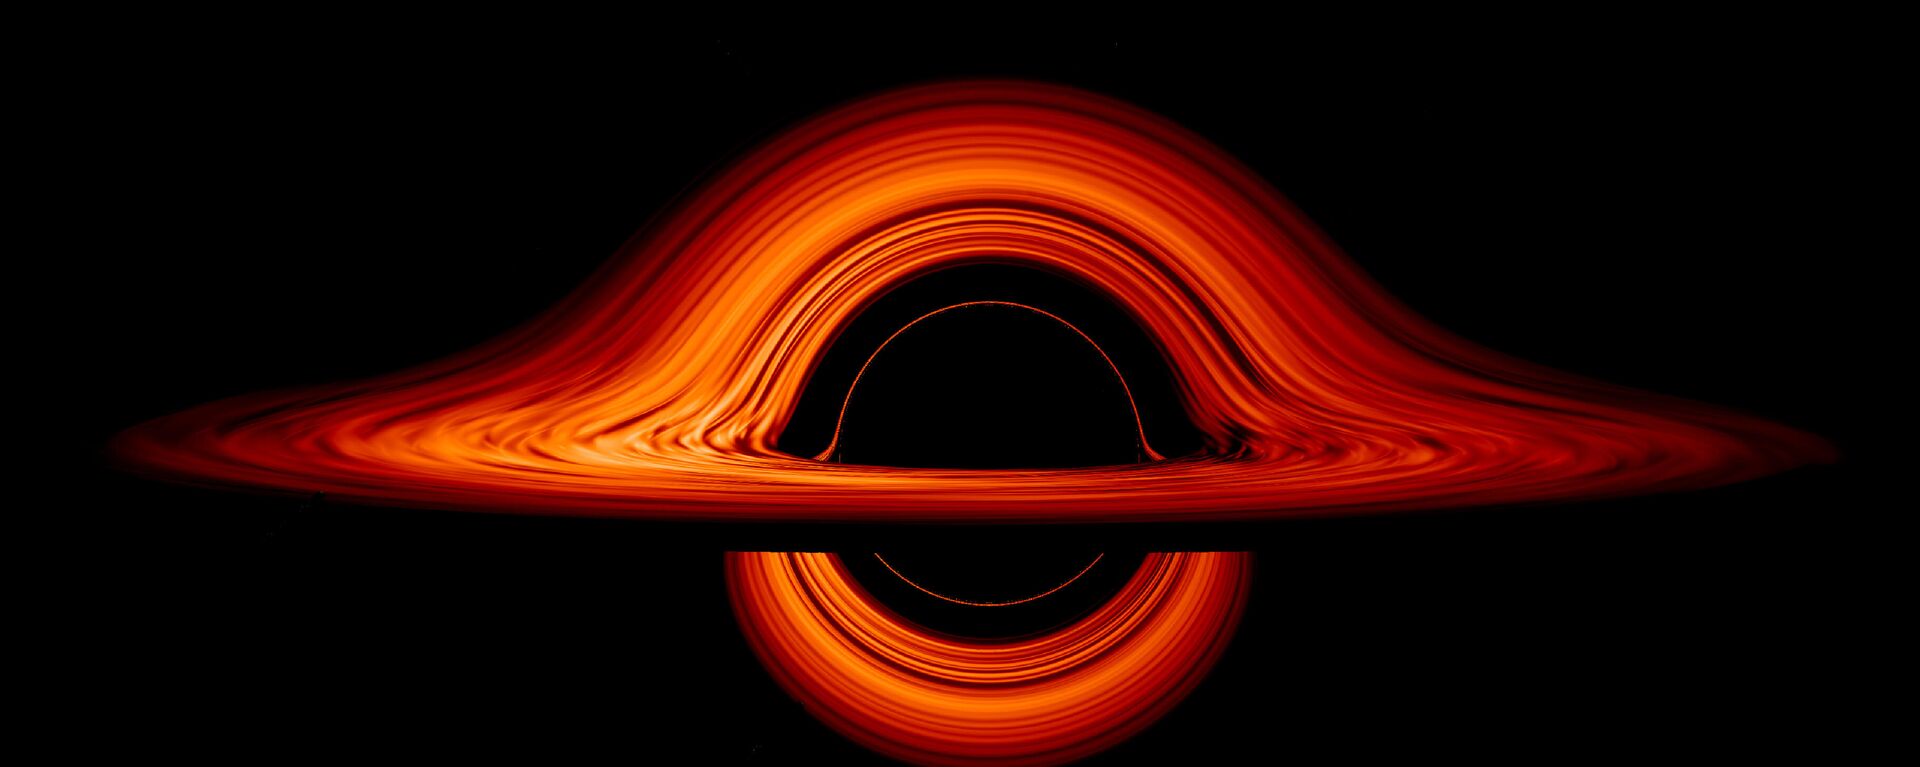 Un agujero negro, imagen referencial - Sputnik Mundo, 1920, 13.09.2021